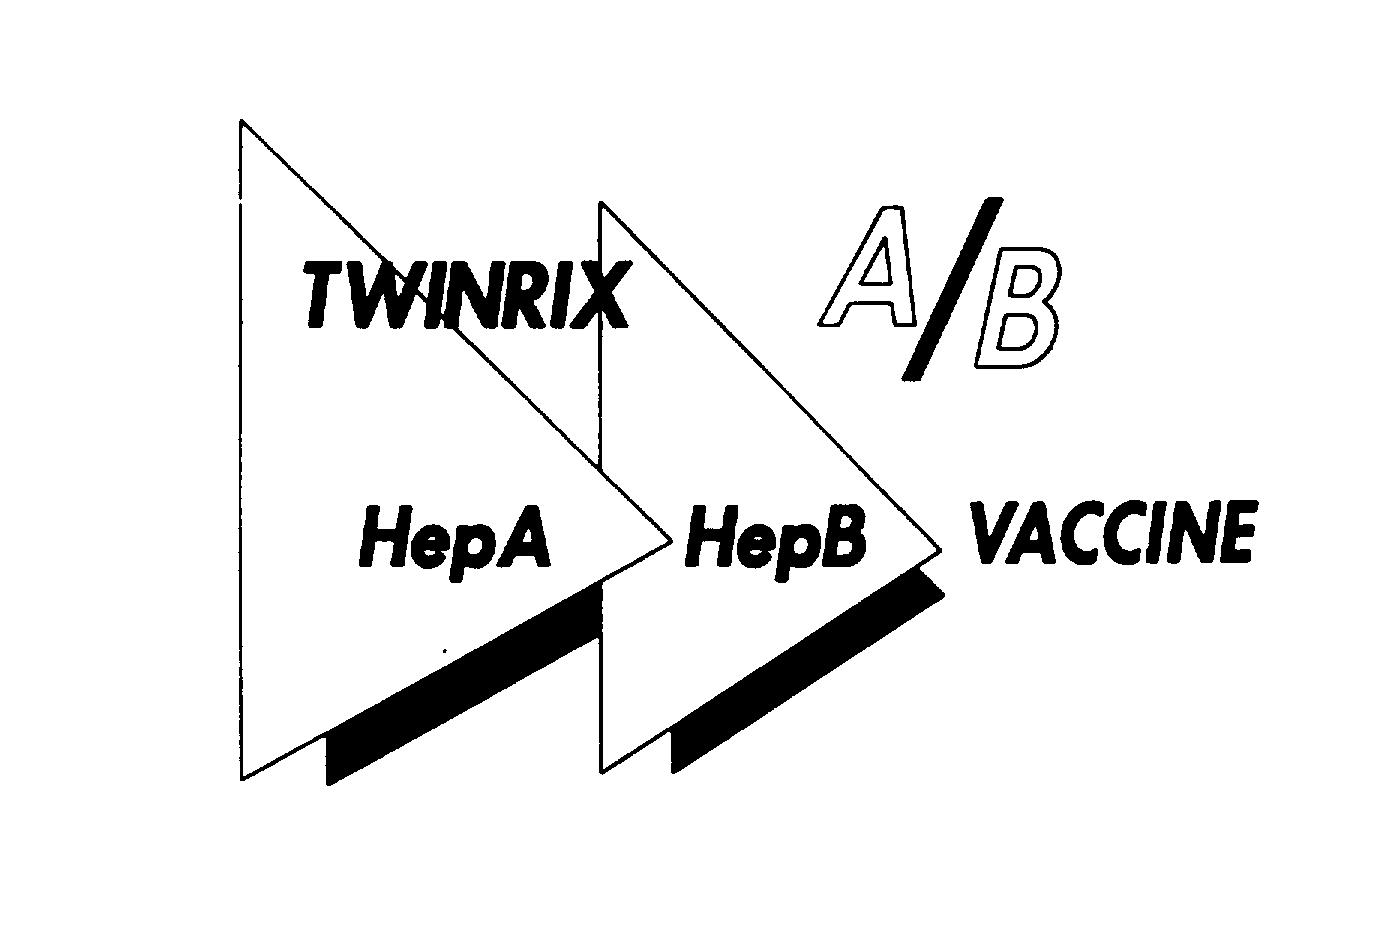  TWINRIX A/B HEPA HEPB VACCINE